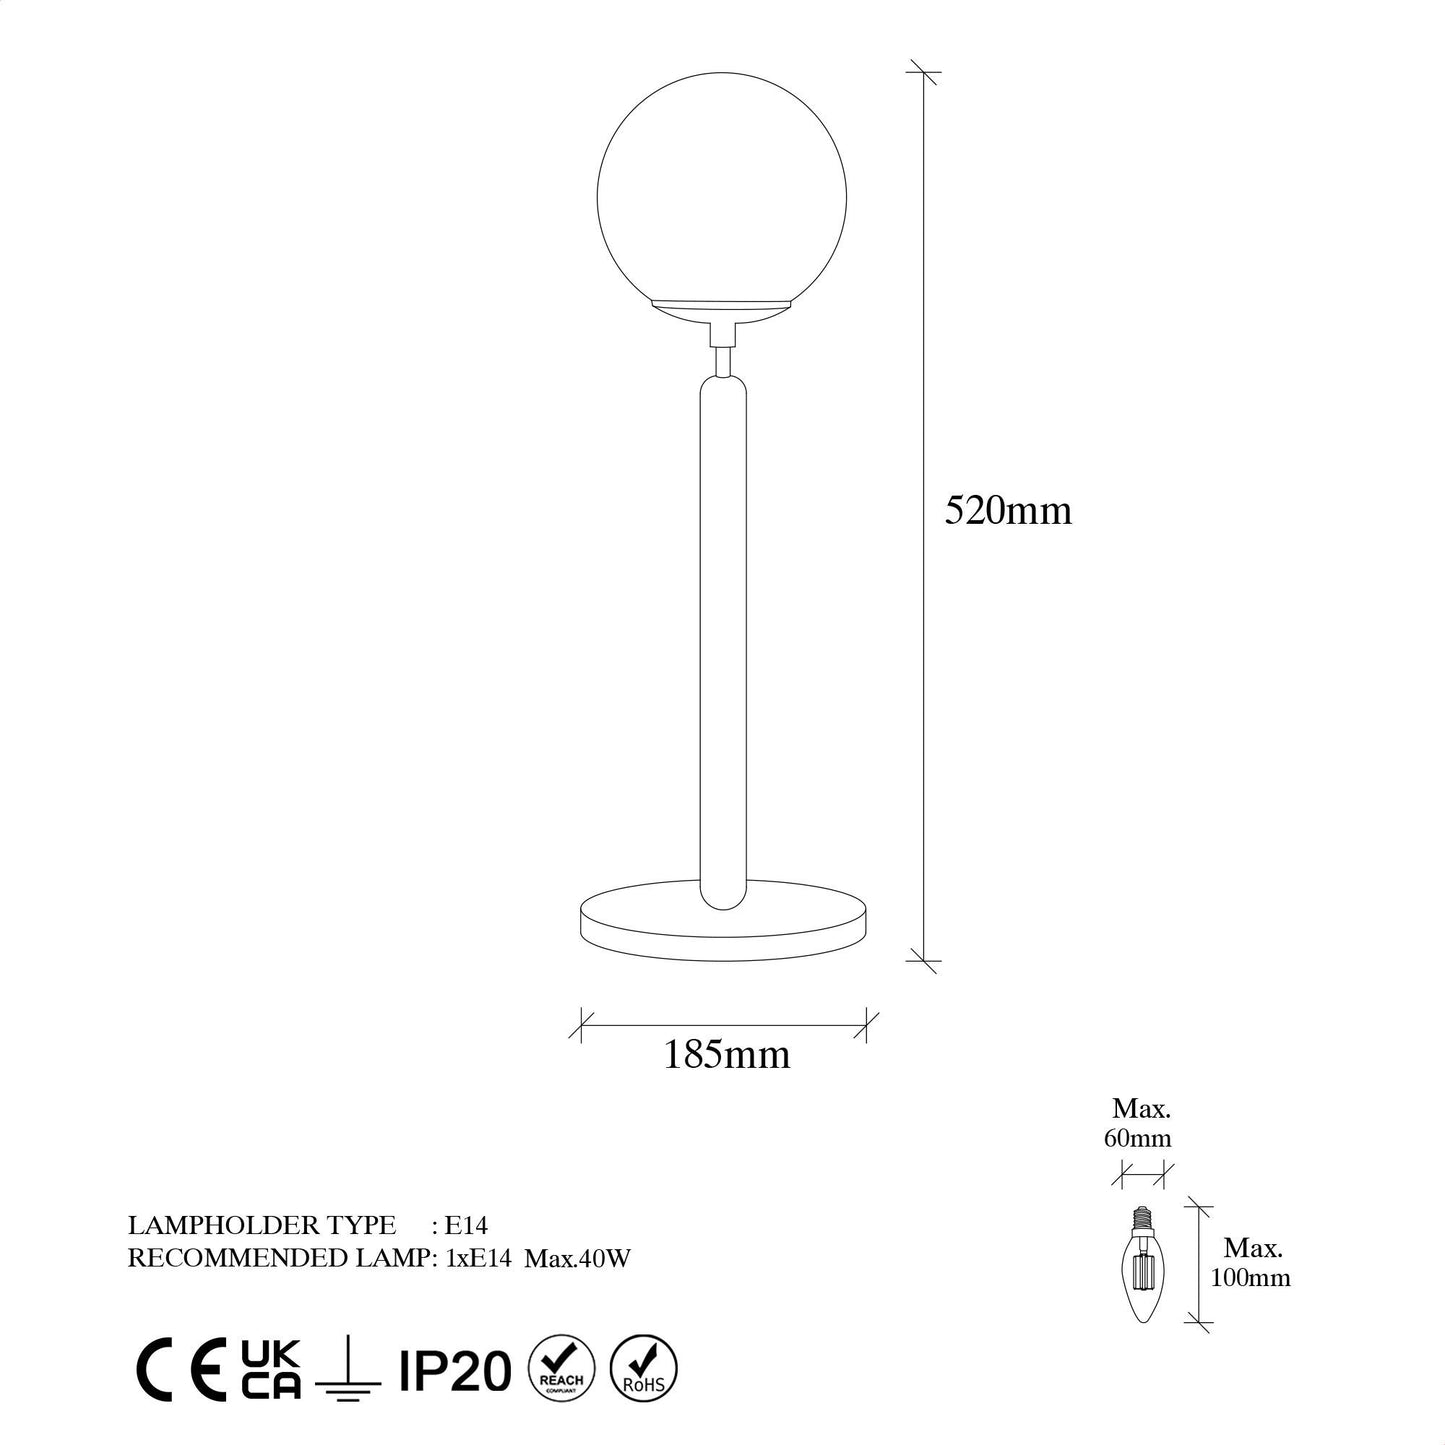 King - 11461 - Table Lamp